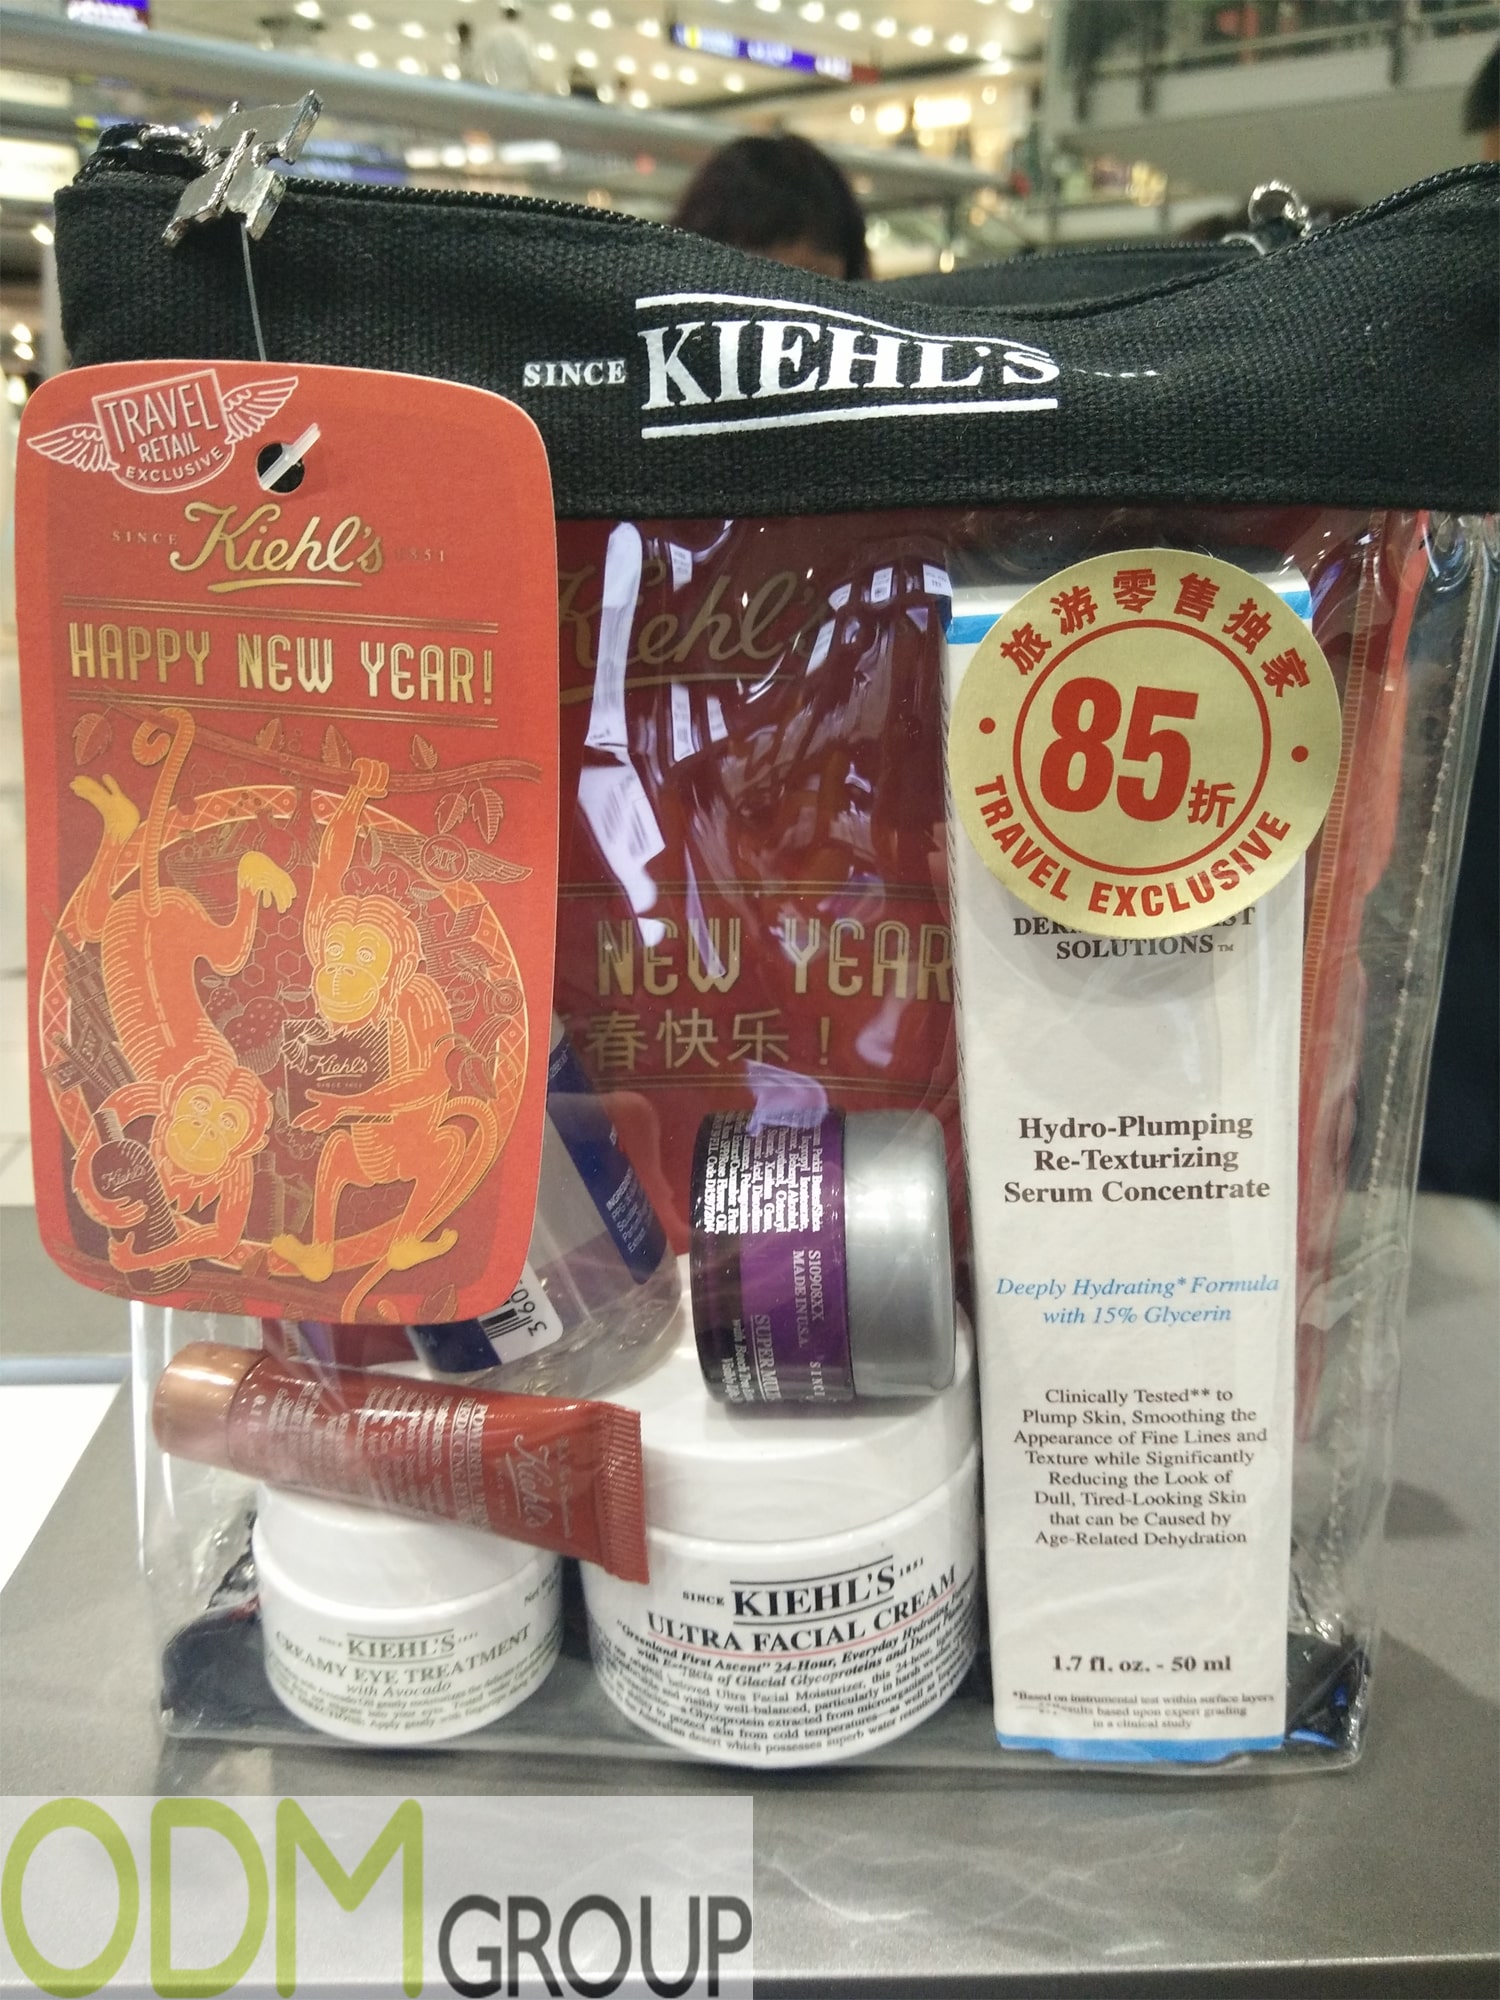 Kiehl's Shopping Bag 8L” x 4W” x 10H” | eBay